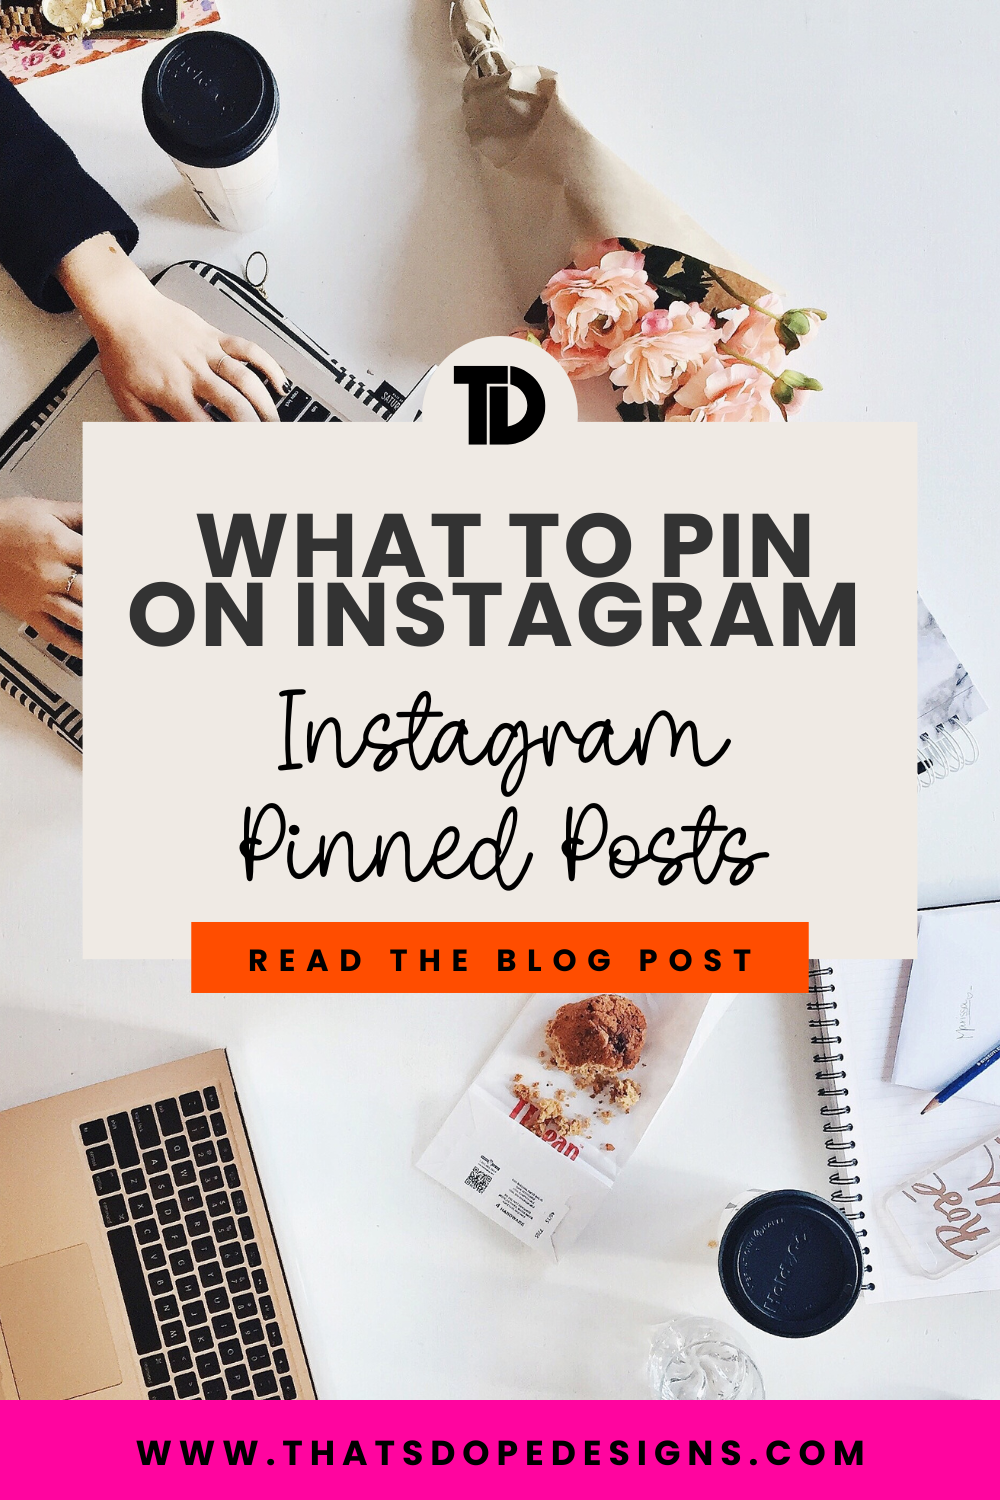 Instagram Pinned Posts